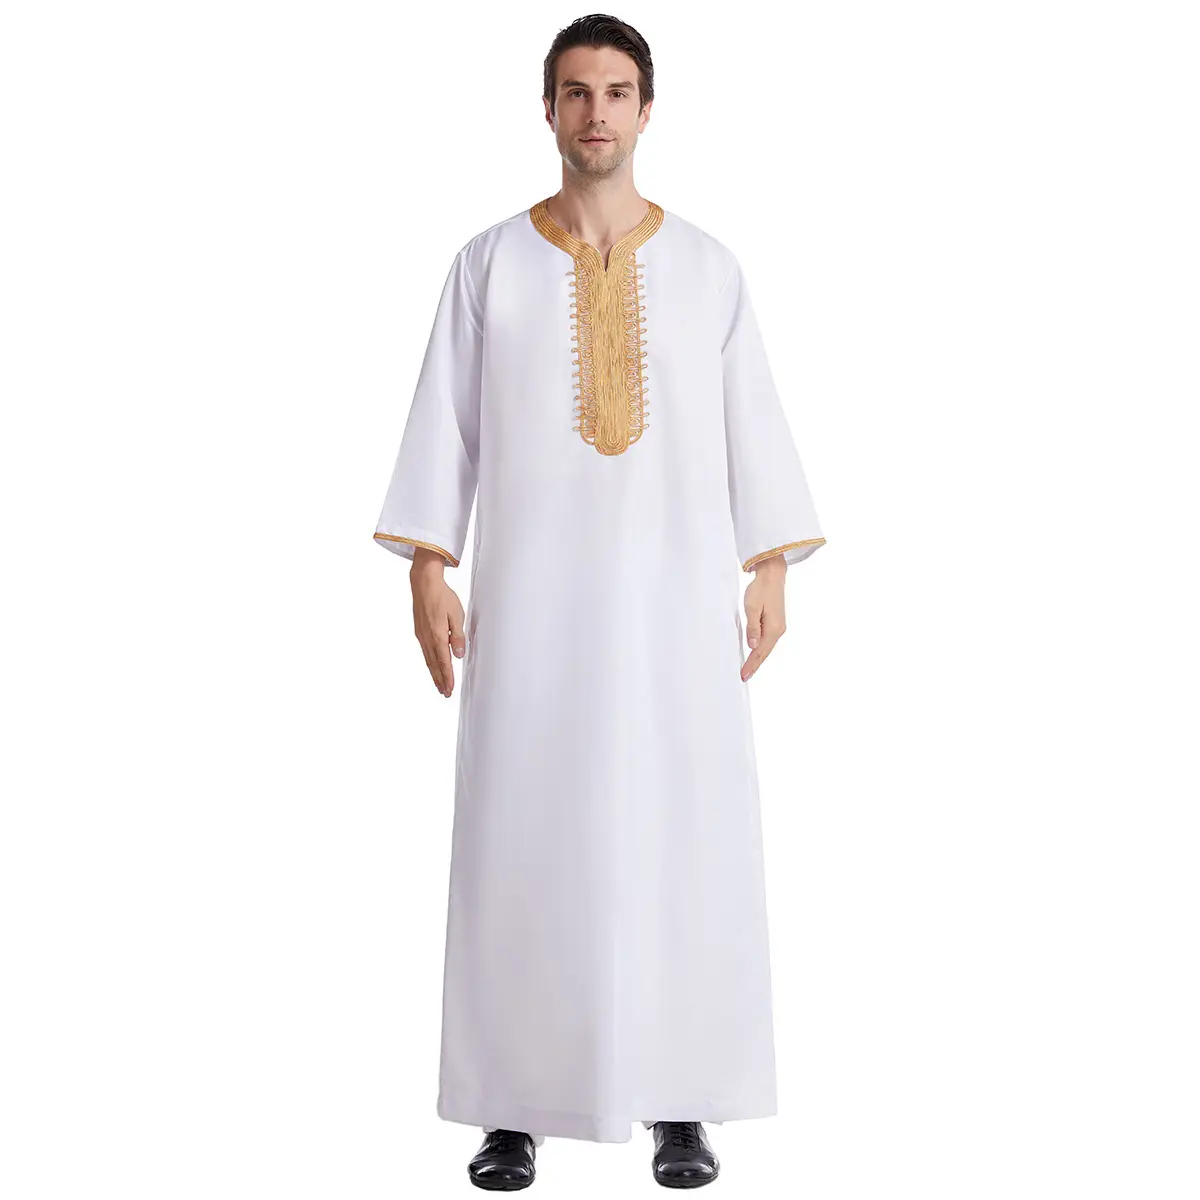 Hot Selling Male Africa Clothing Muslim Men Long Sleeve Thobe Middle East Saudi Arab Kaftan Islamic Abaya Dress Dubai Robes